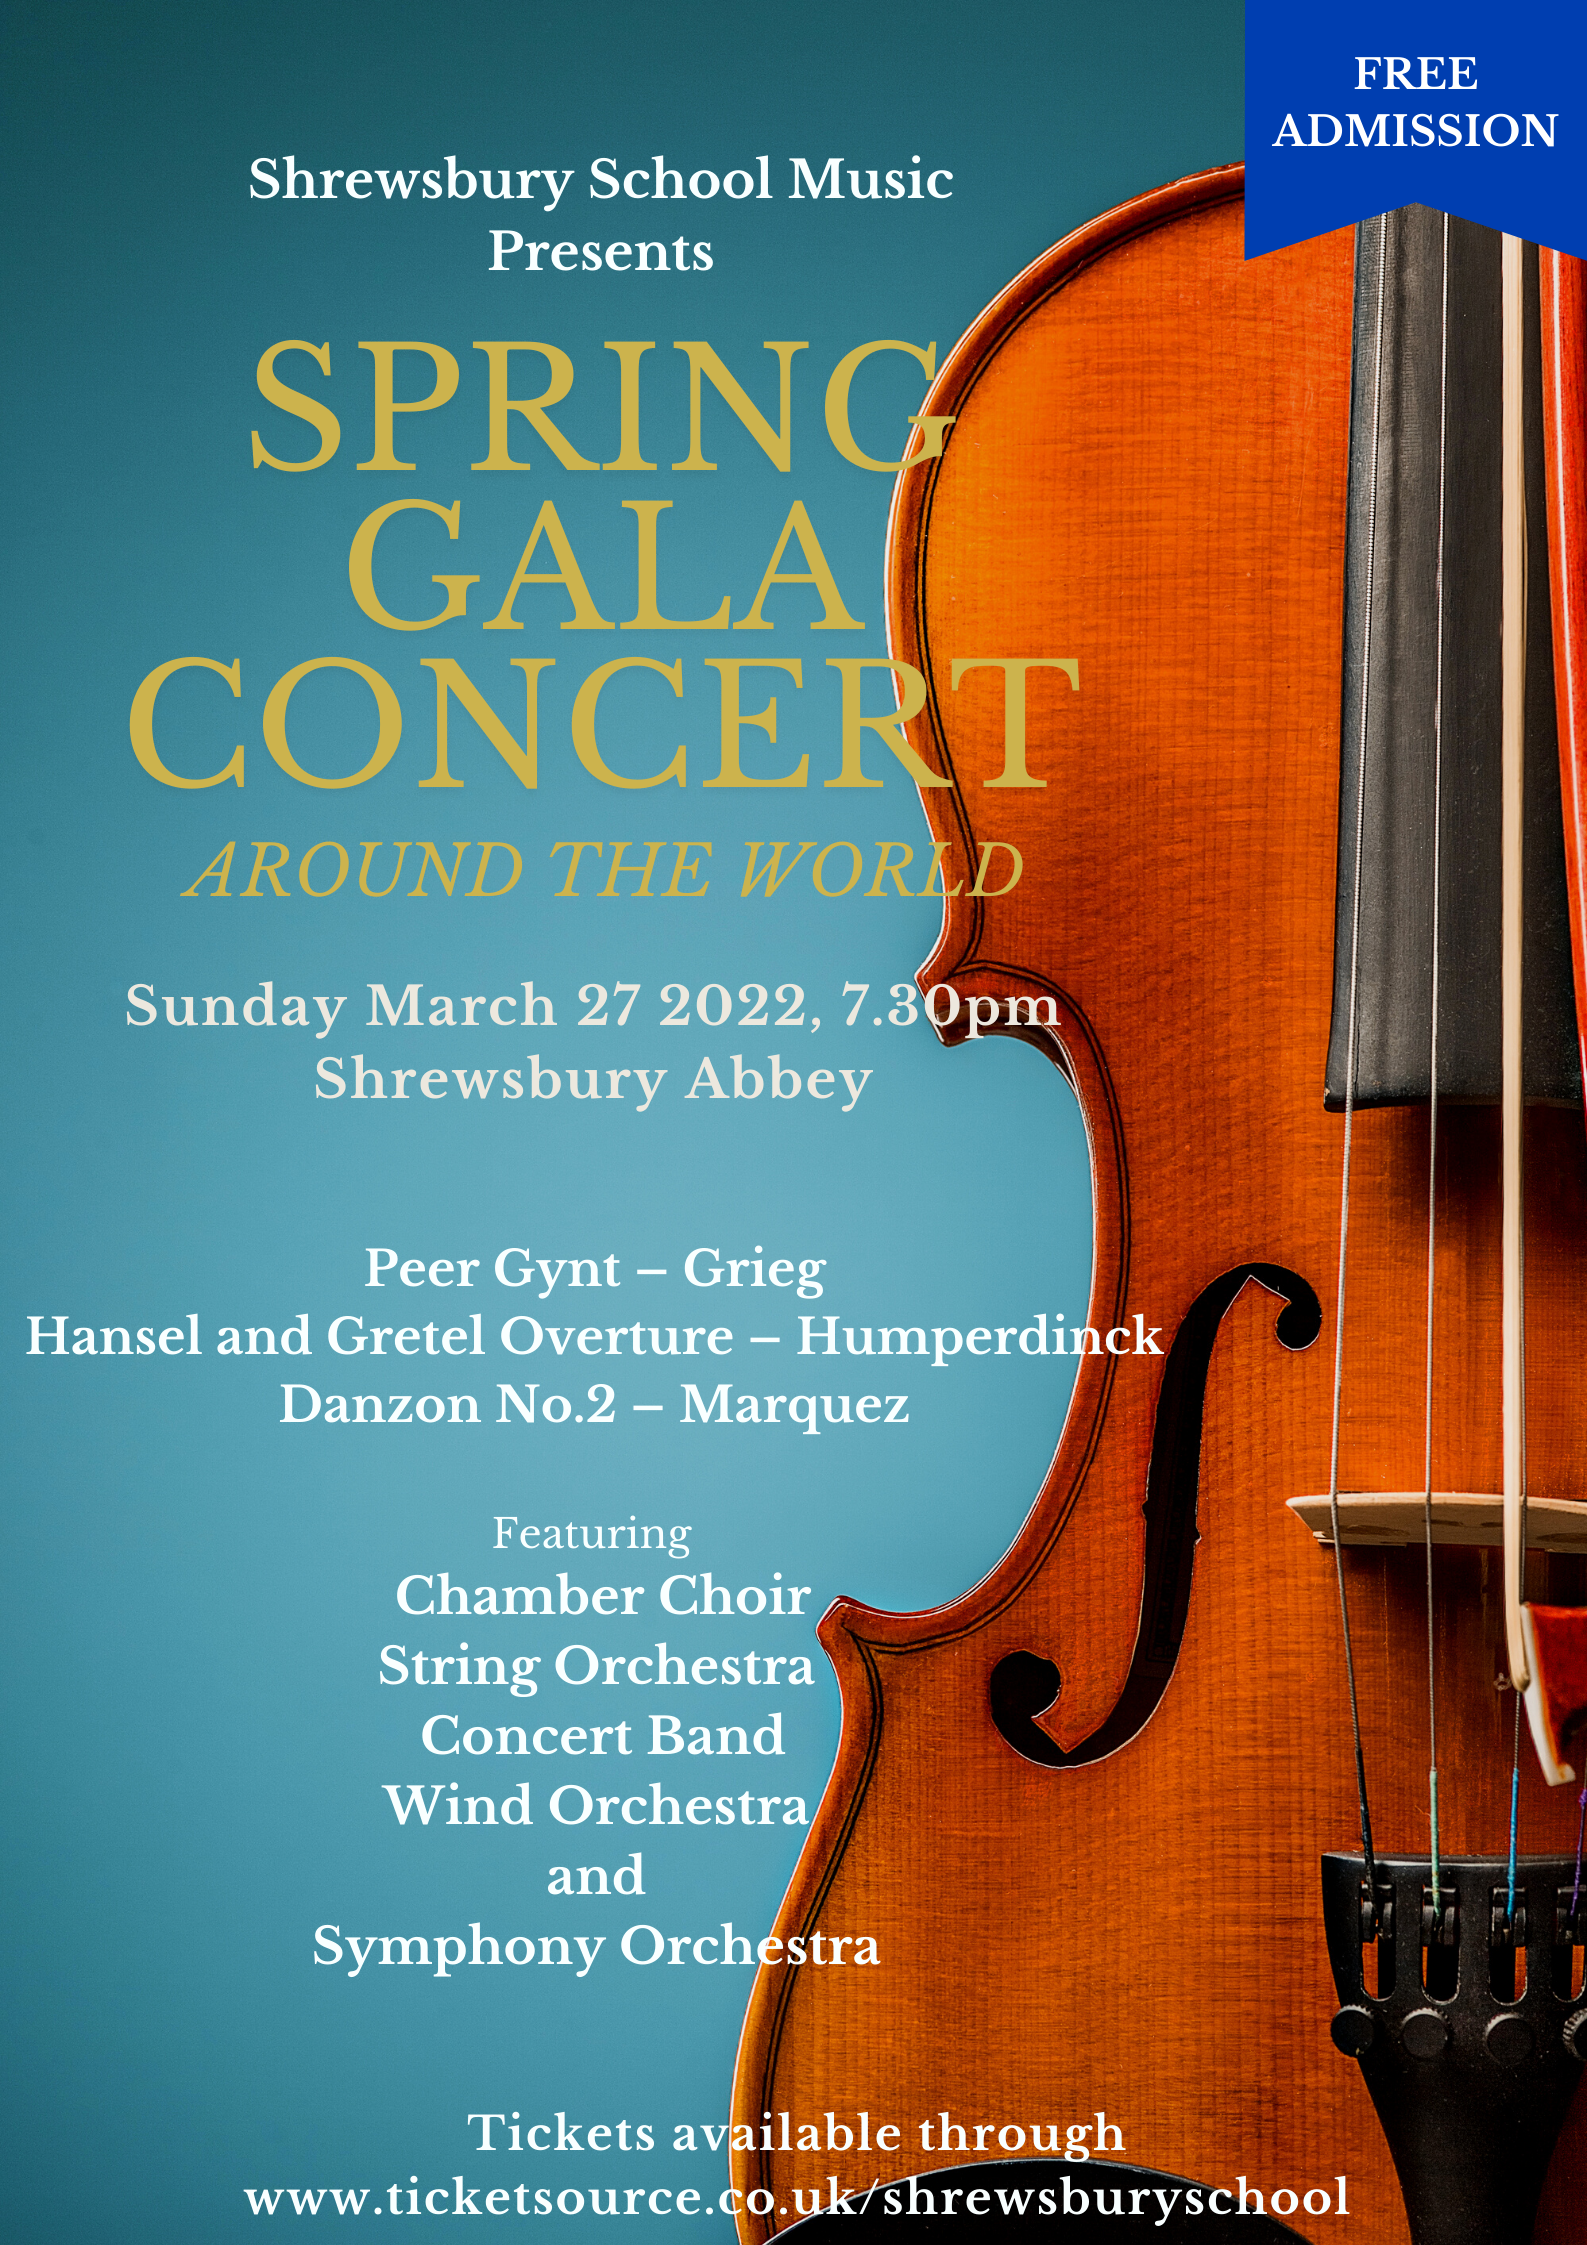 Spring Gala Concert – Around the World at Shrewsbury Abbey